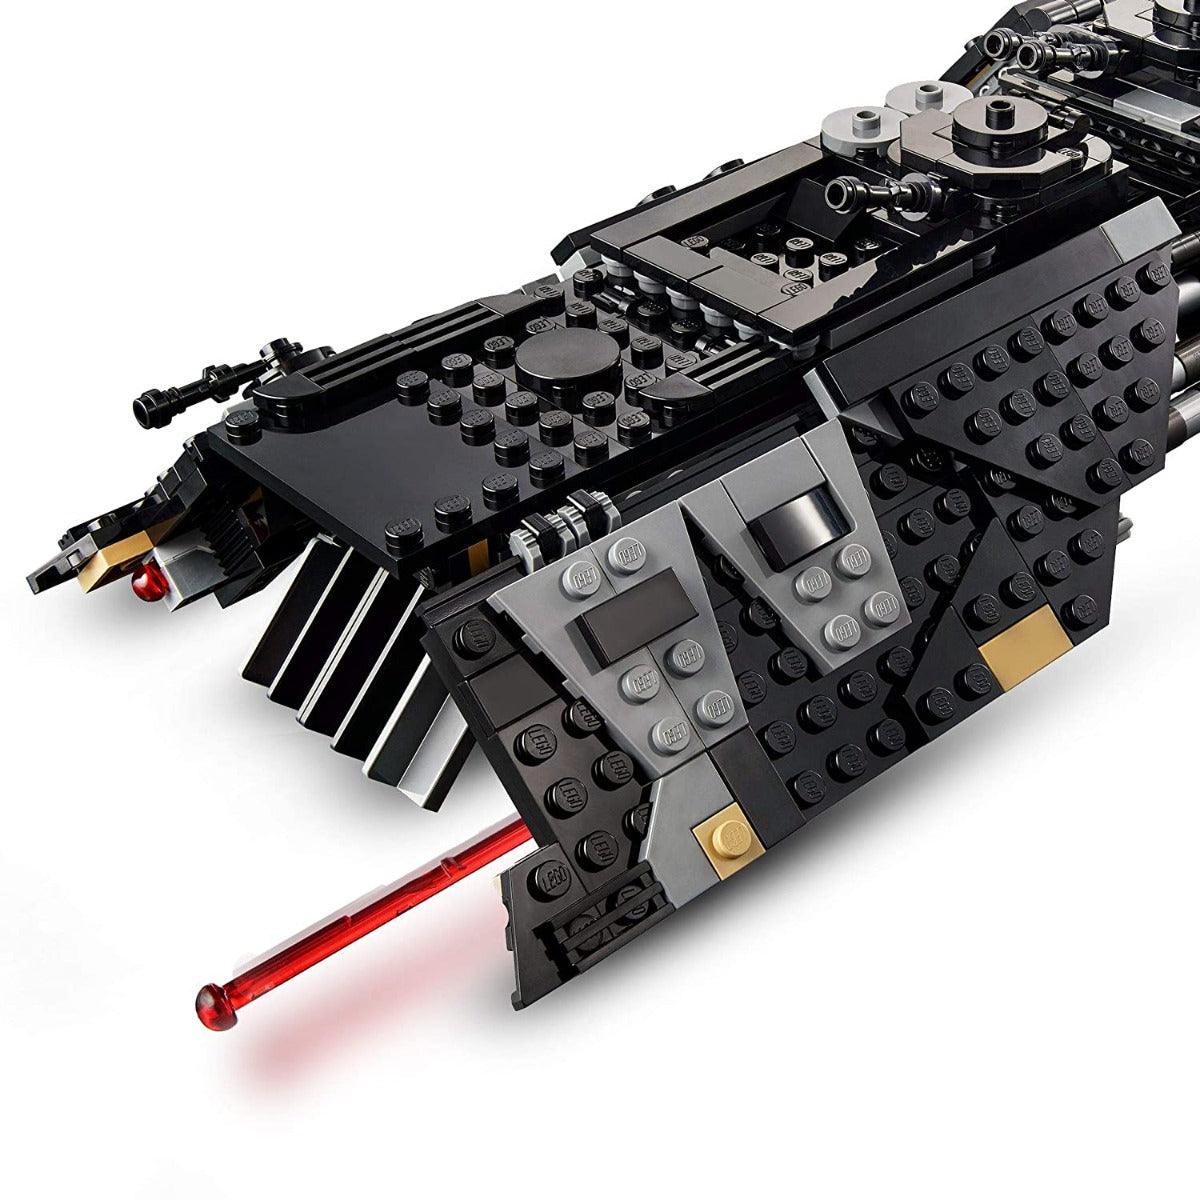 LEGO Star Wars Knights of Ren Transport Ship